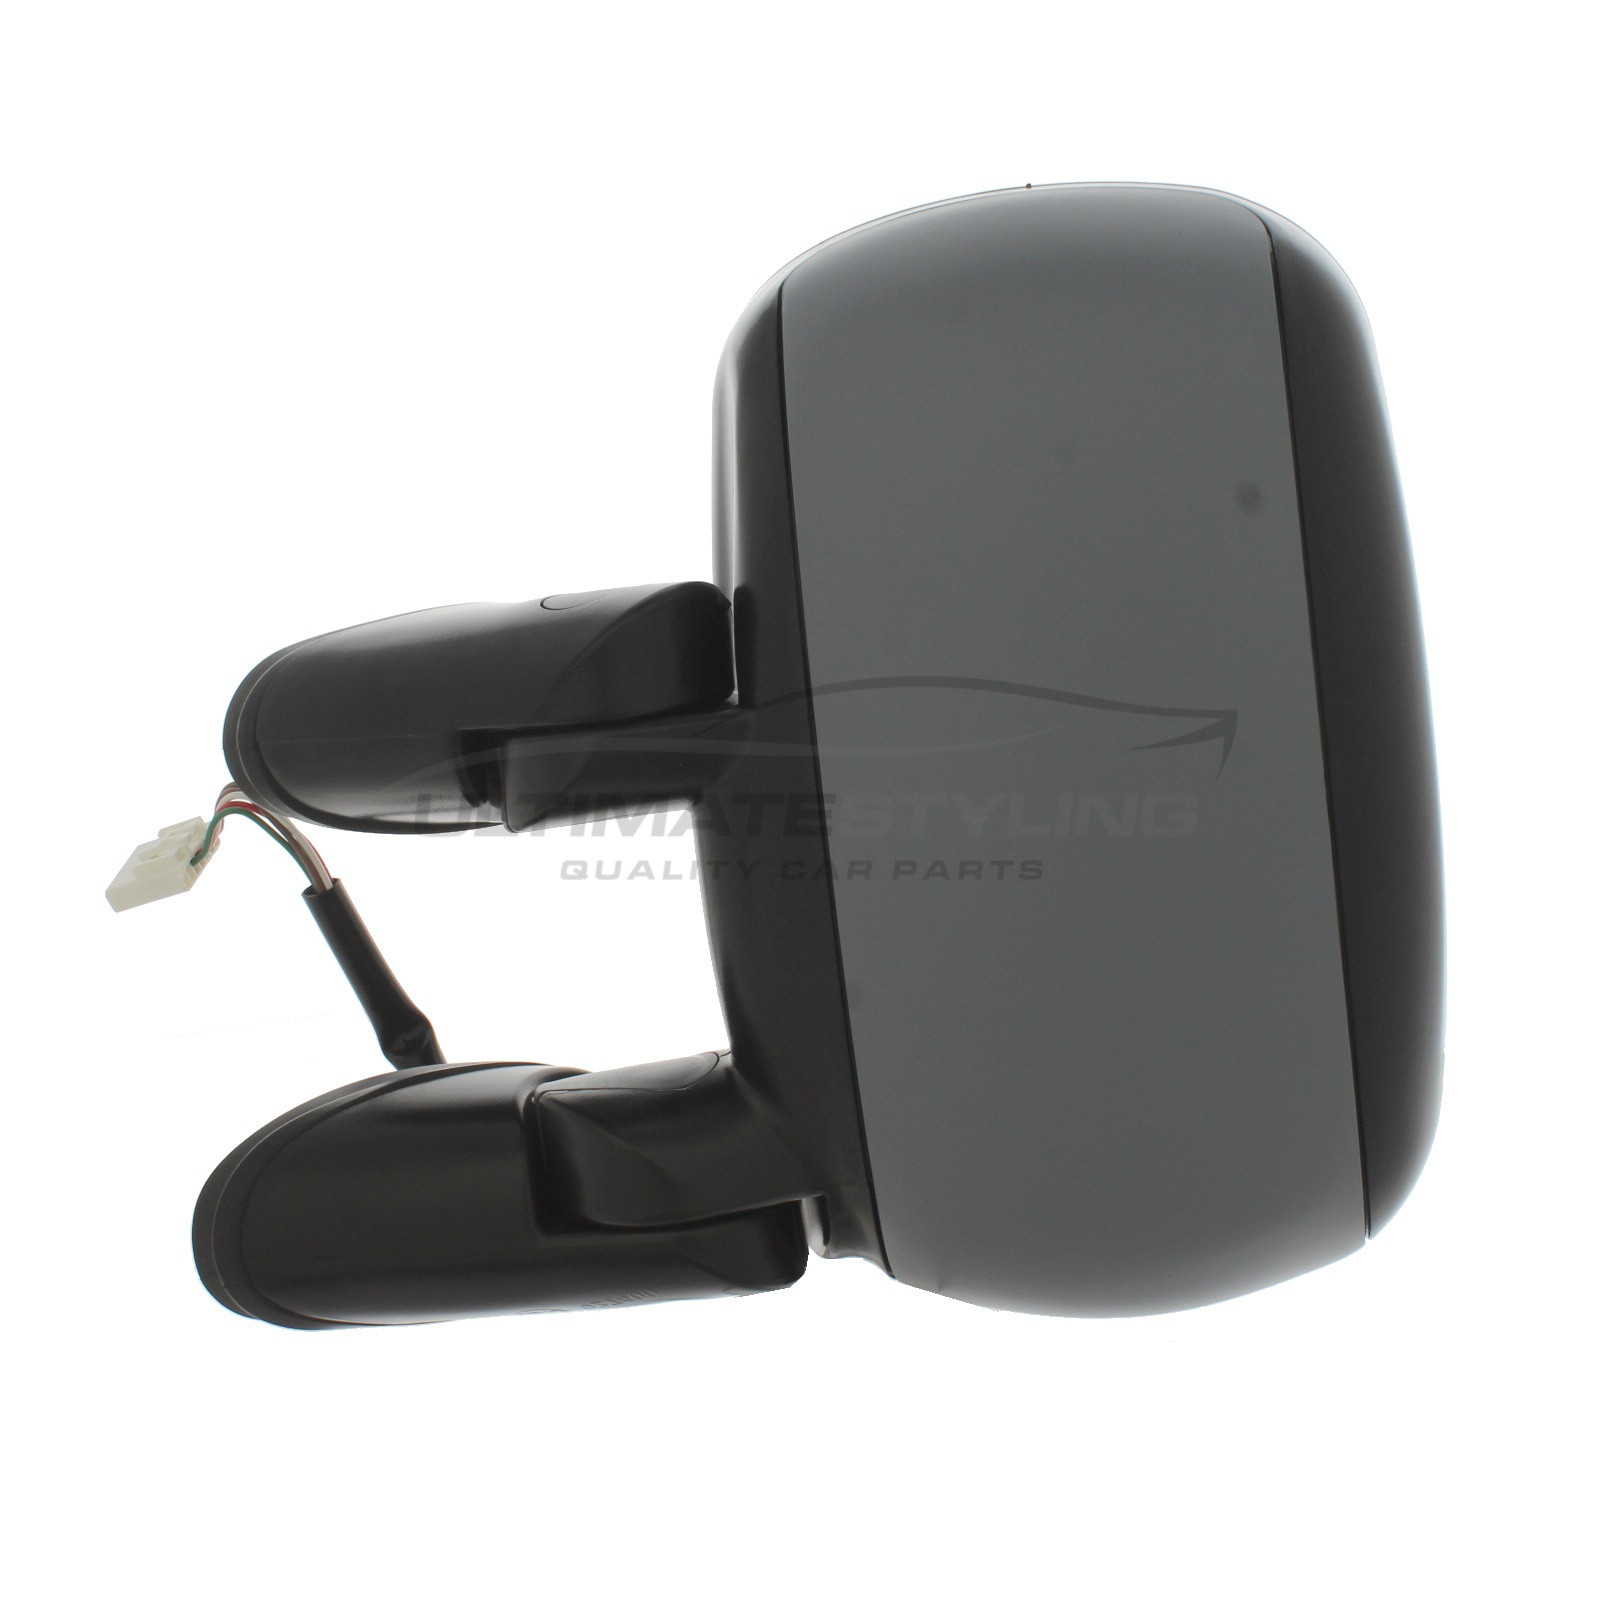 Fiat Doblo 2001-2010 Wing Mirror / Door Mirror - Passenger Side (LH) - Electric adjustment - Heated Glass - Primed